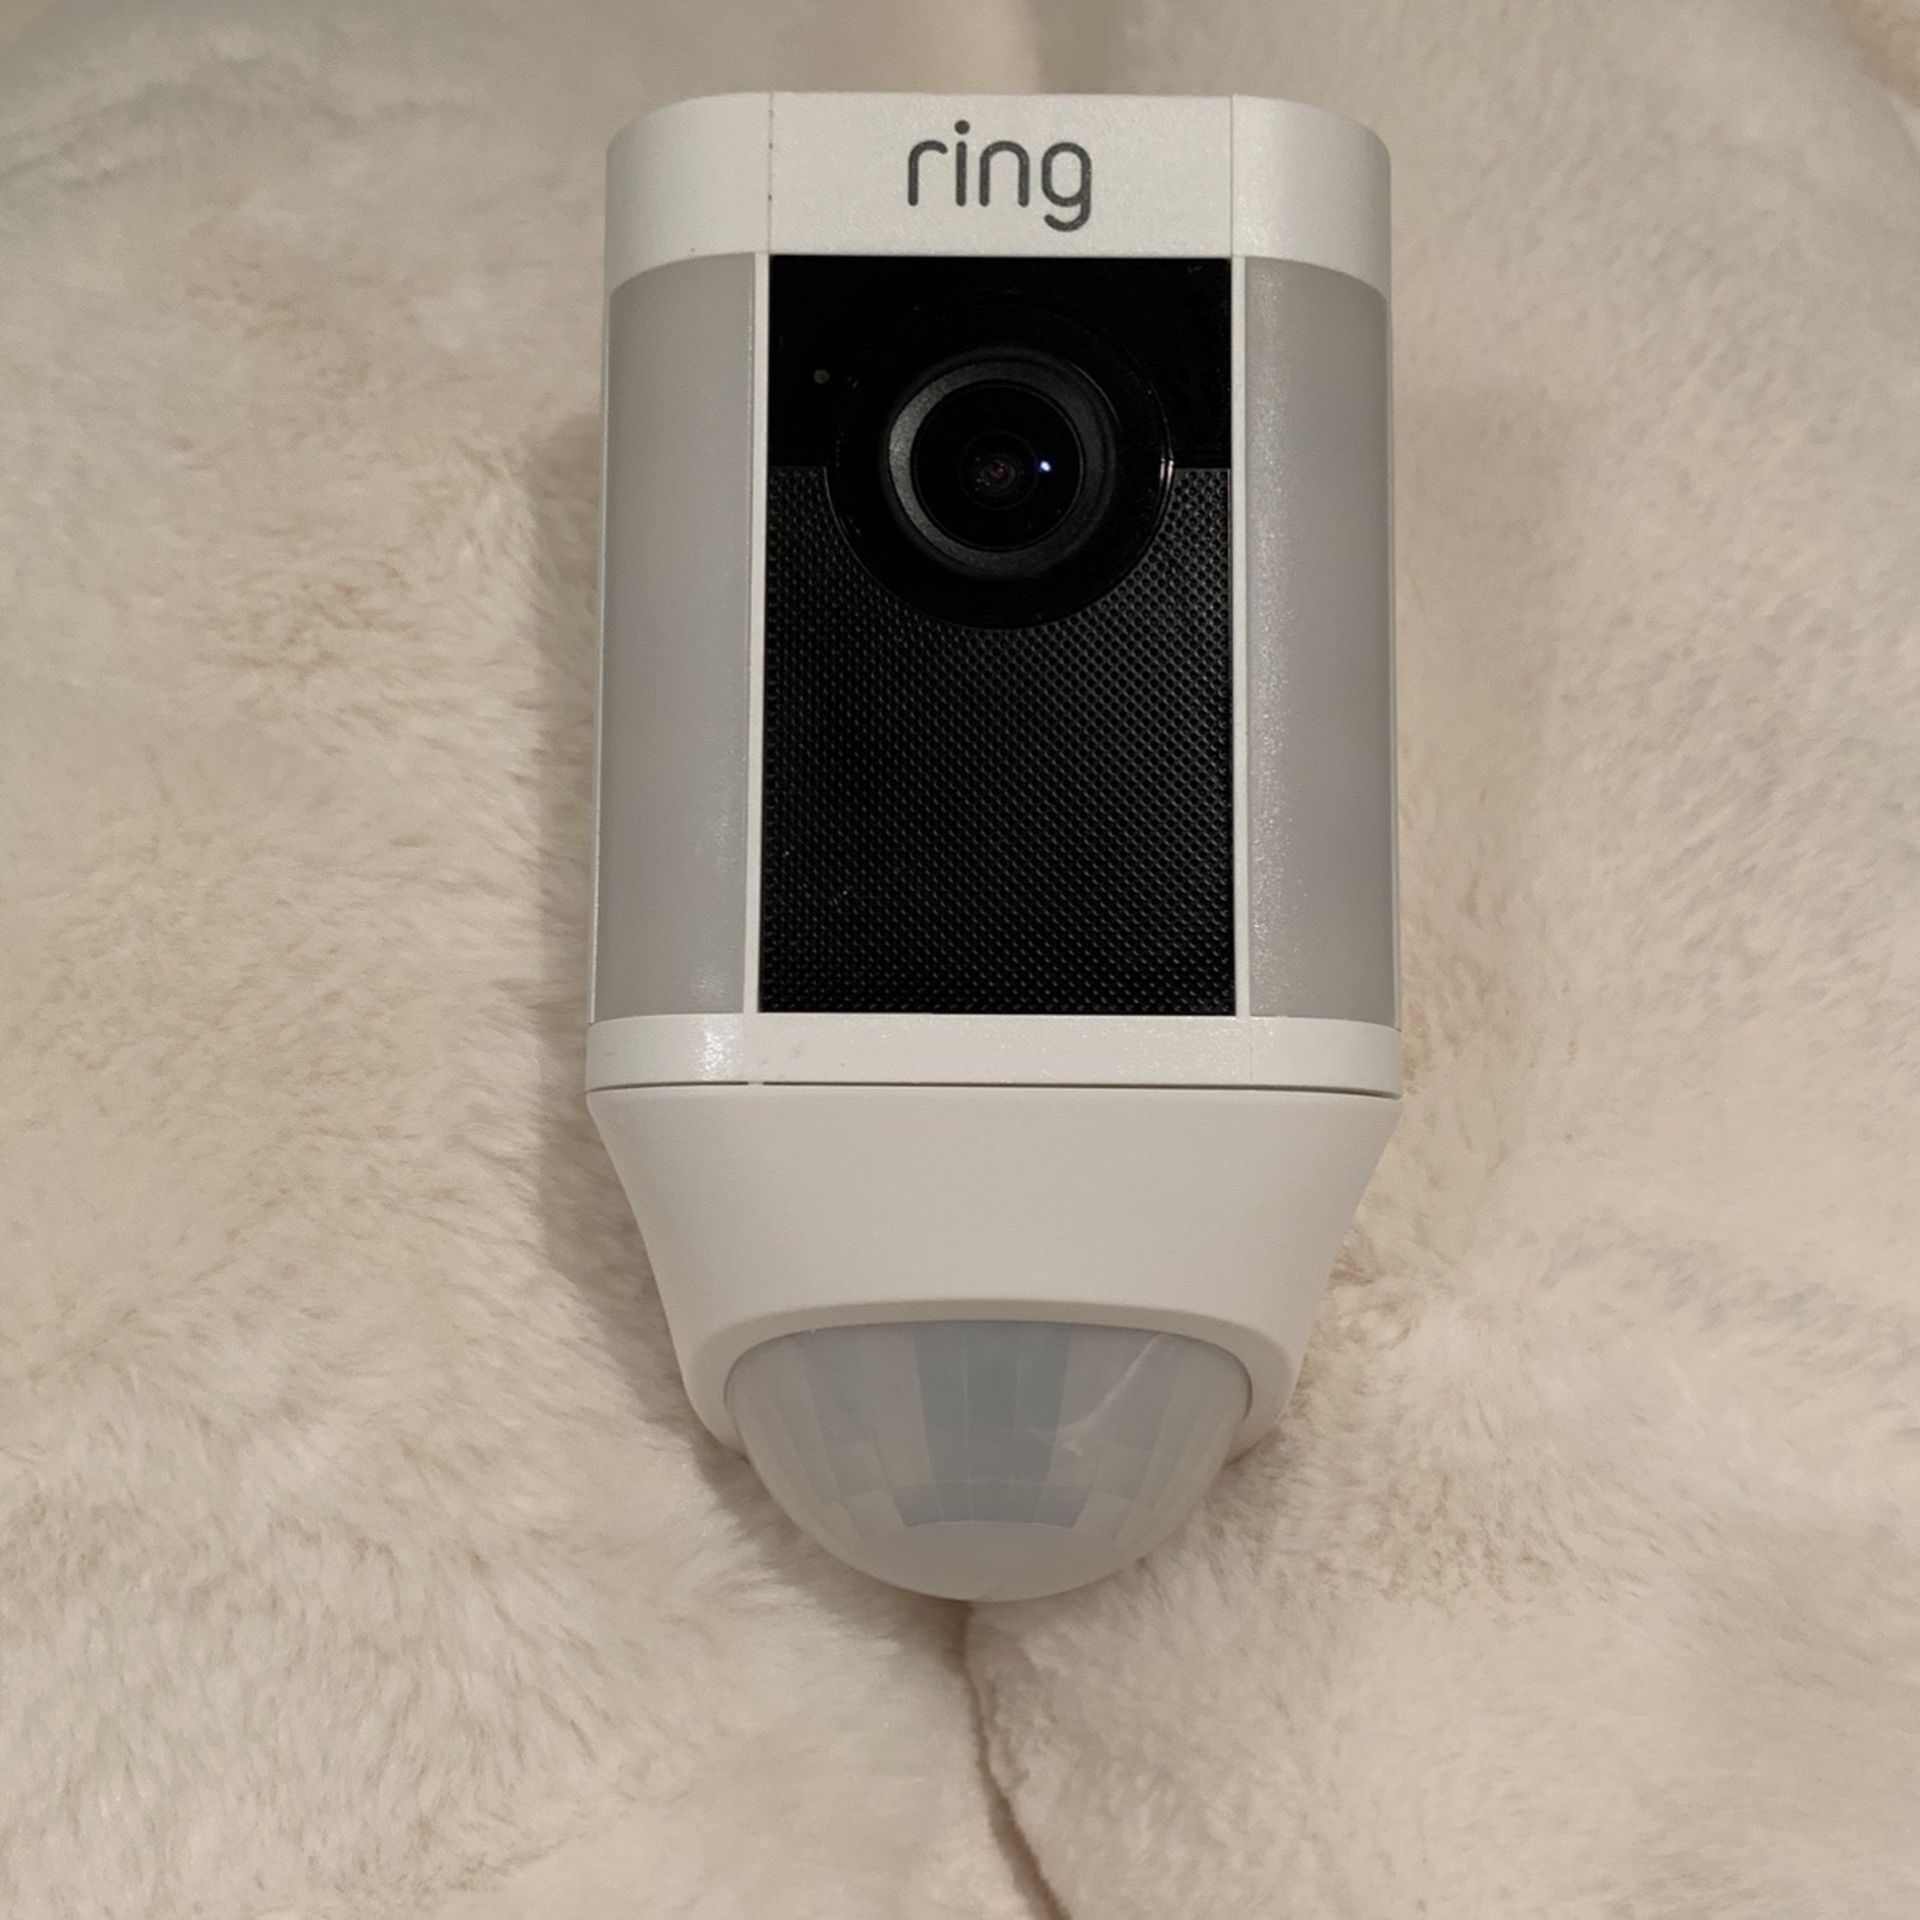 3 Wireless Ring Spotlight Security Cameras